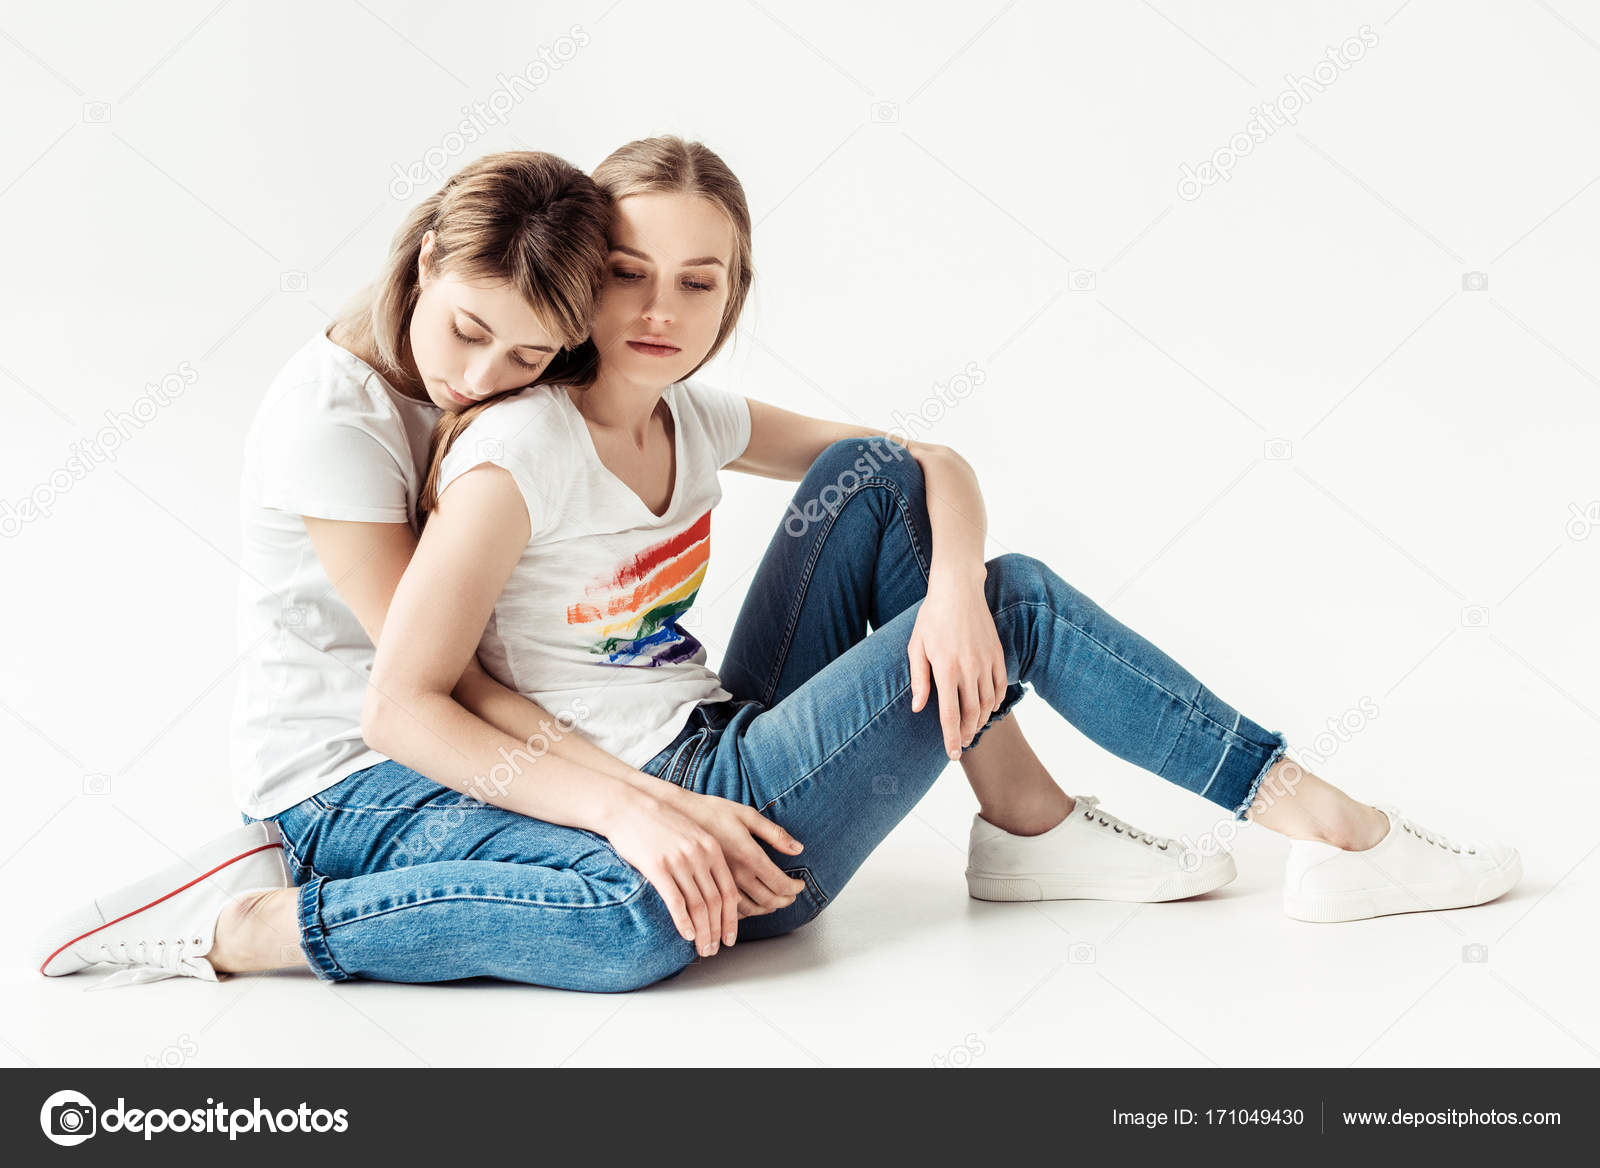 Lesbians Share